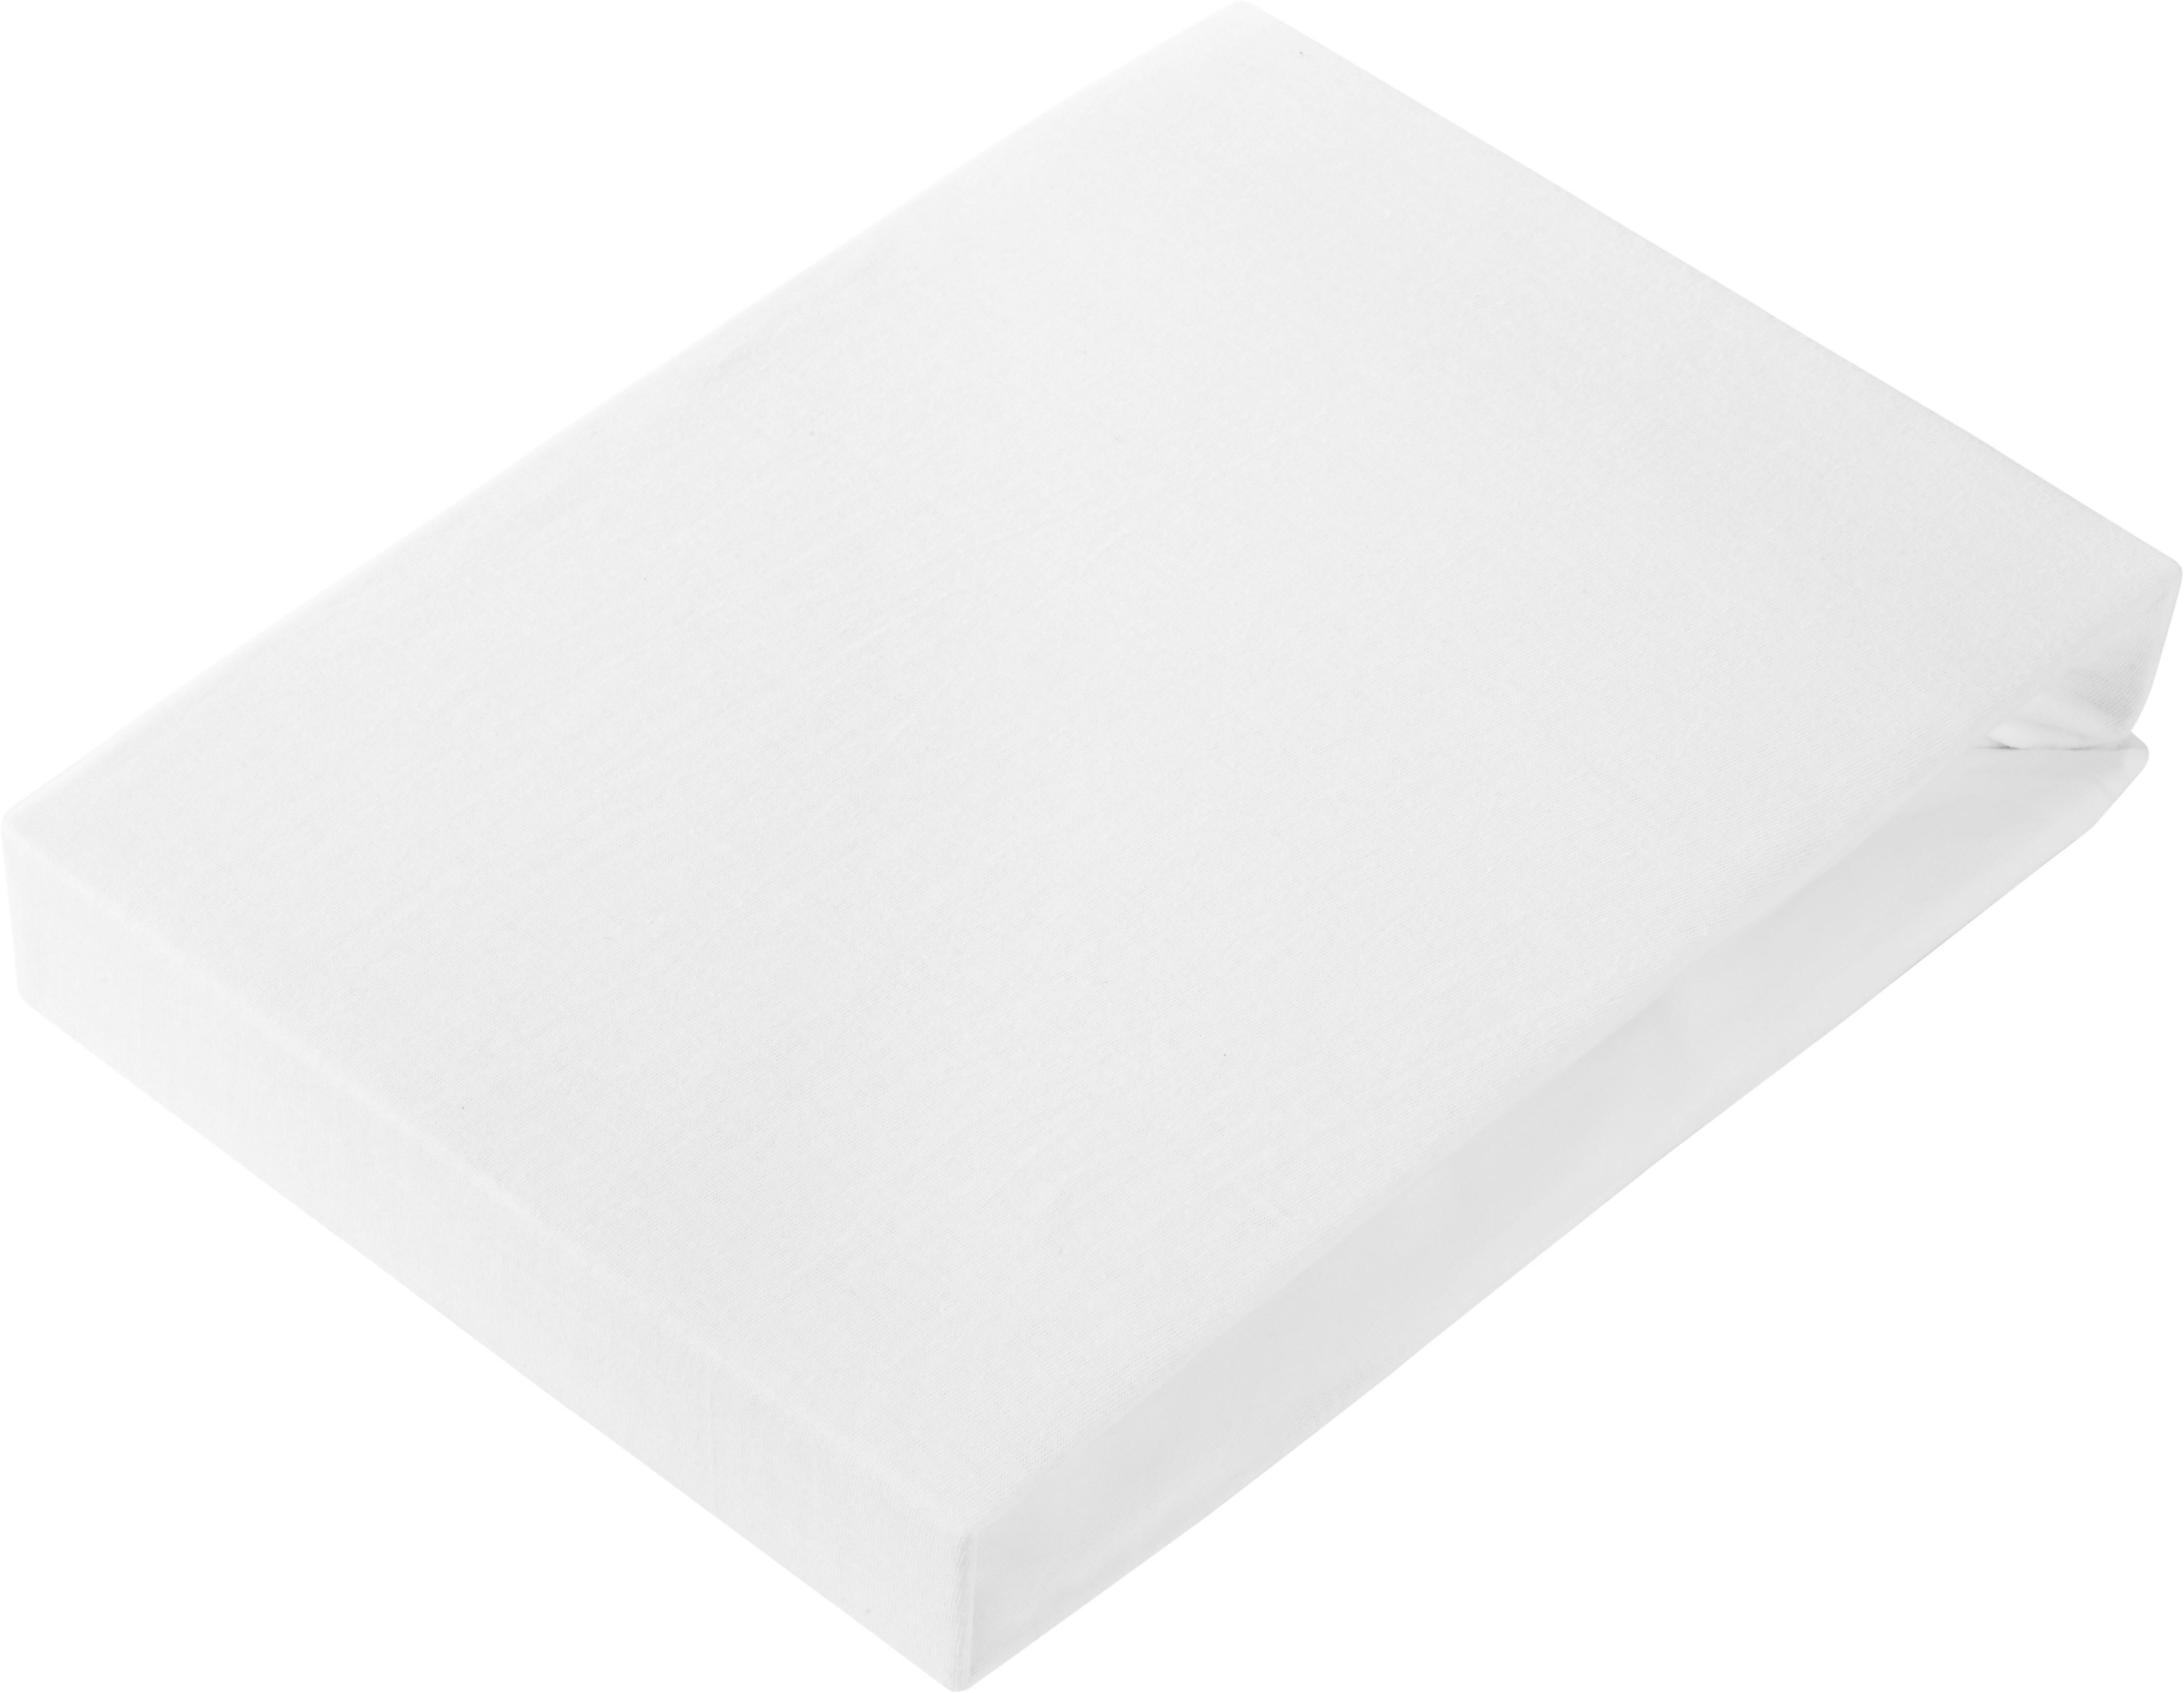 Fixleintuch Basic in Weiß ca. 150x200cm - Weiss, Textil (150/200cm) - Modern Living